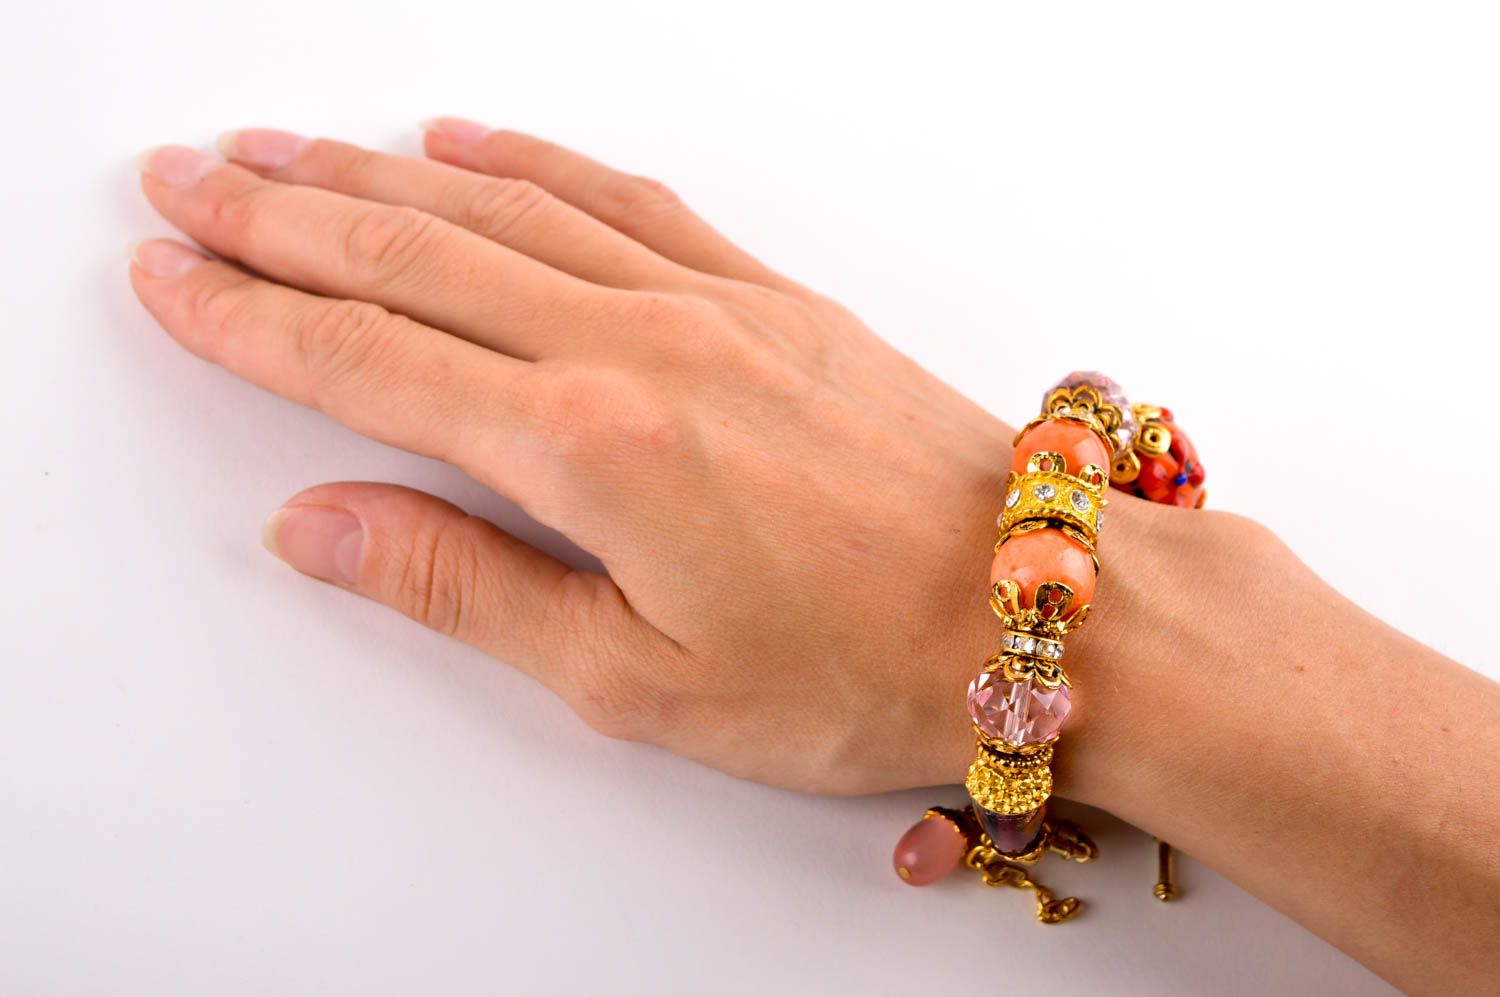 Handmade bracelet with natural stones designer stone jewelry fashion jewelry photo 5